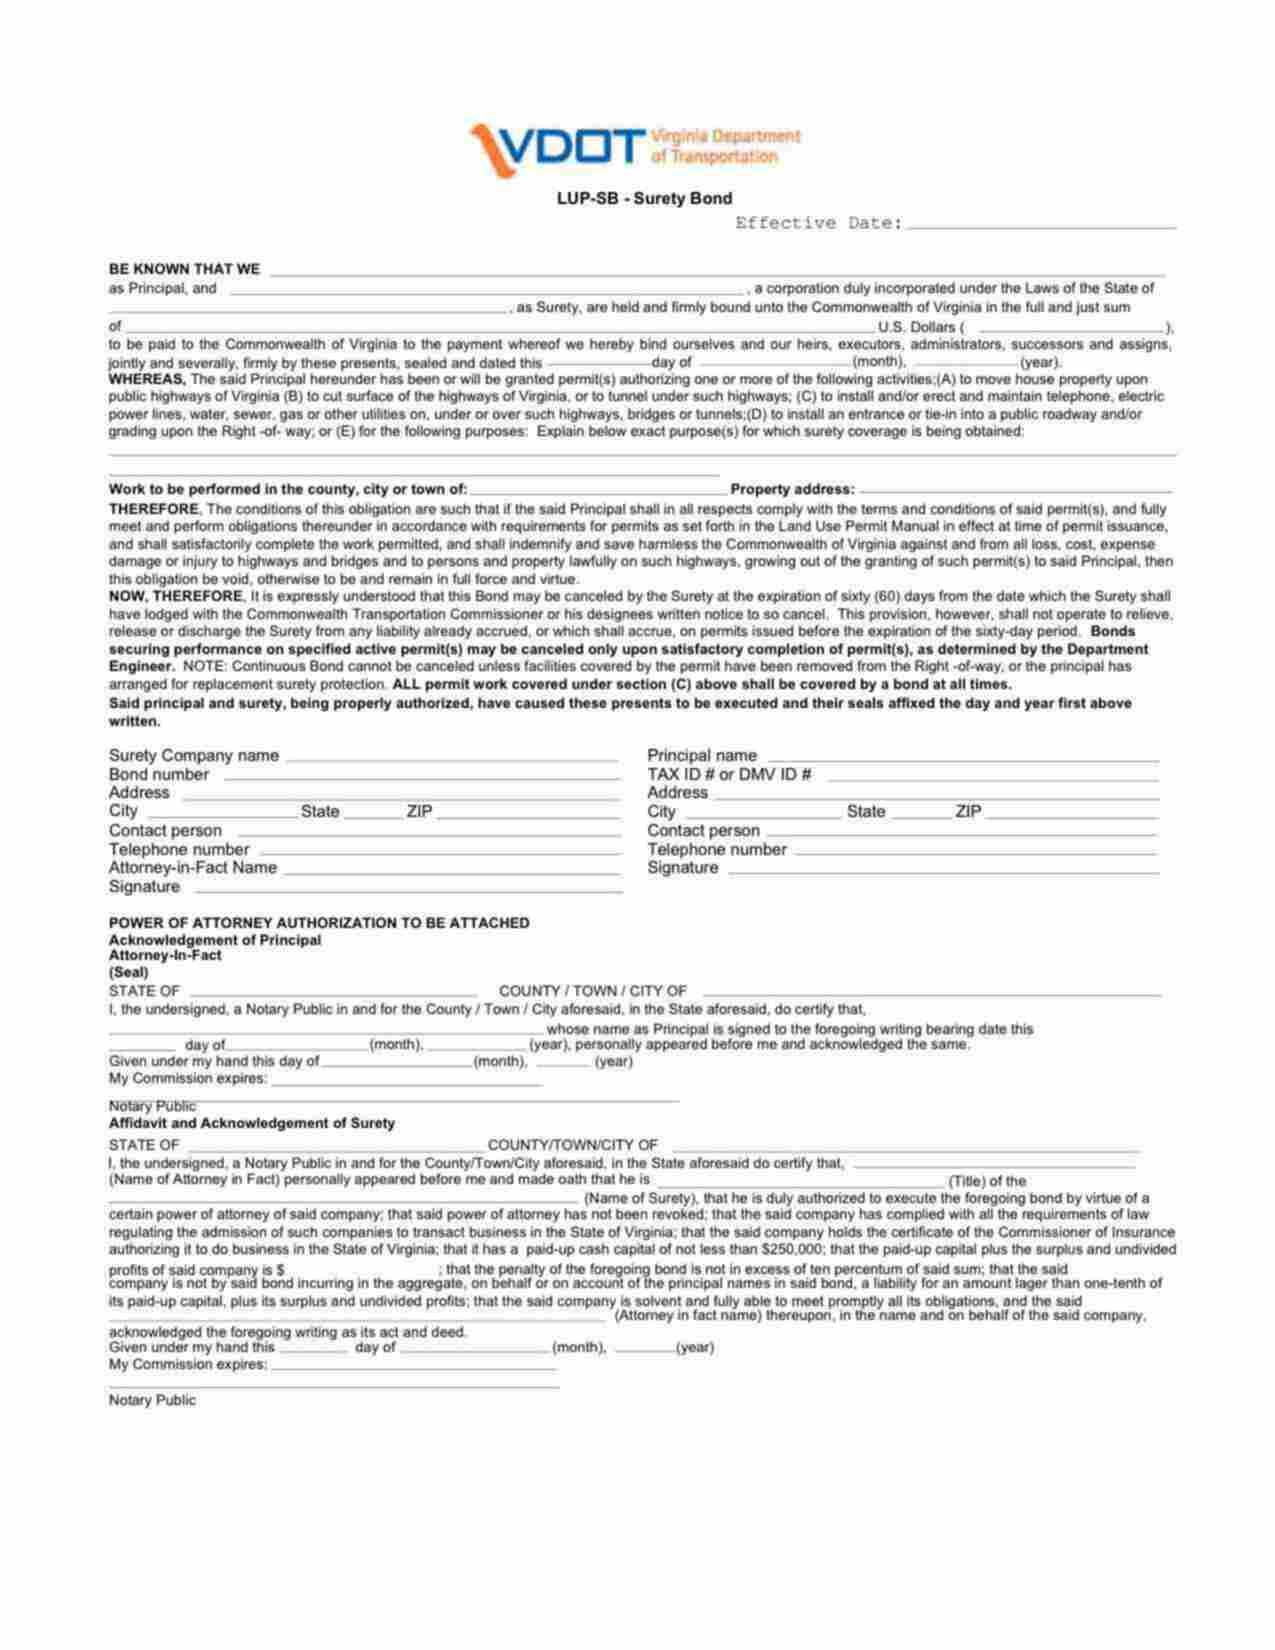 Virginia Land Use Permit: Type C Utilities Bond Form